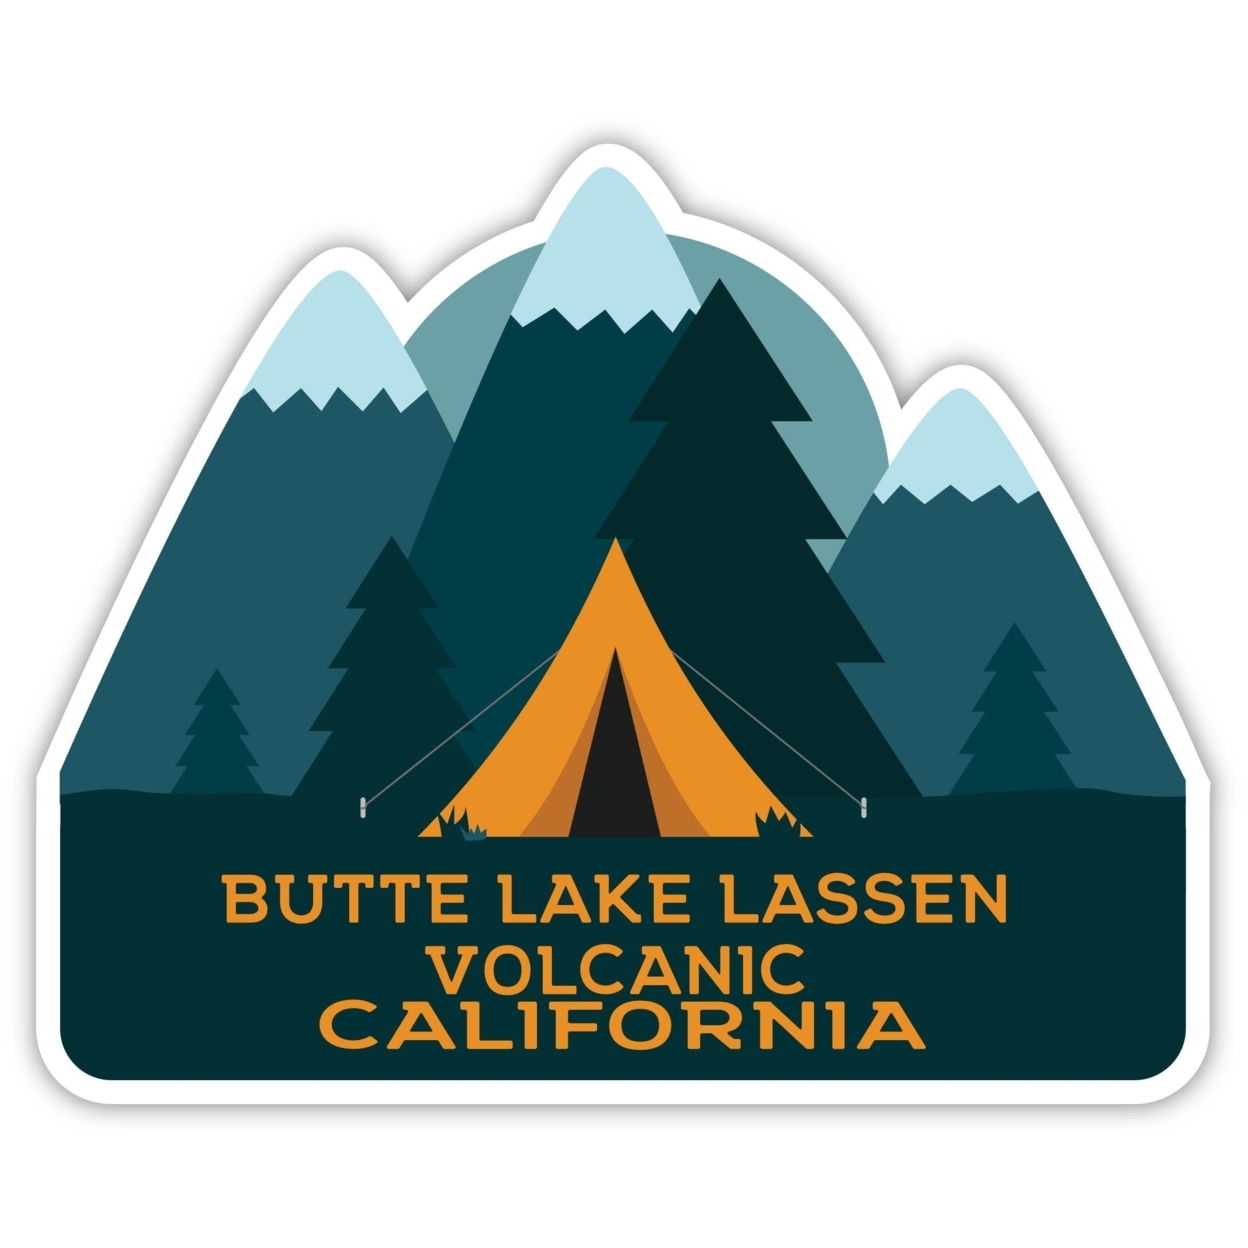 Butte Lake Lassen Volcanic California Souvenir Decorative Stickers (Choose Theme And Size) - 4-Pack, 12-Inch, Tent